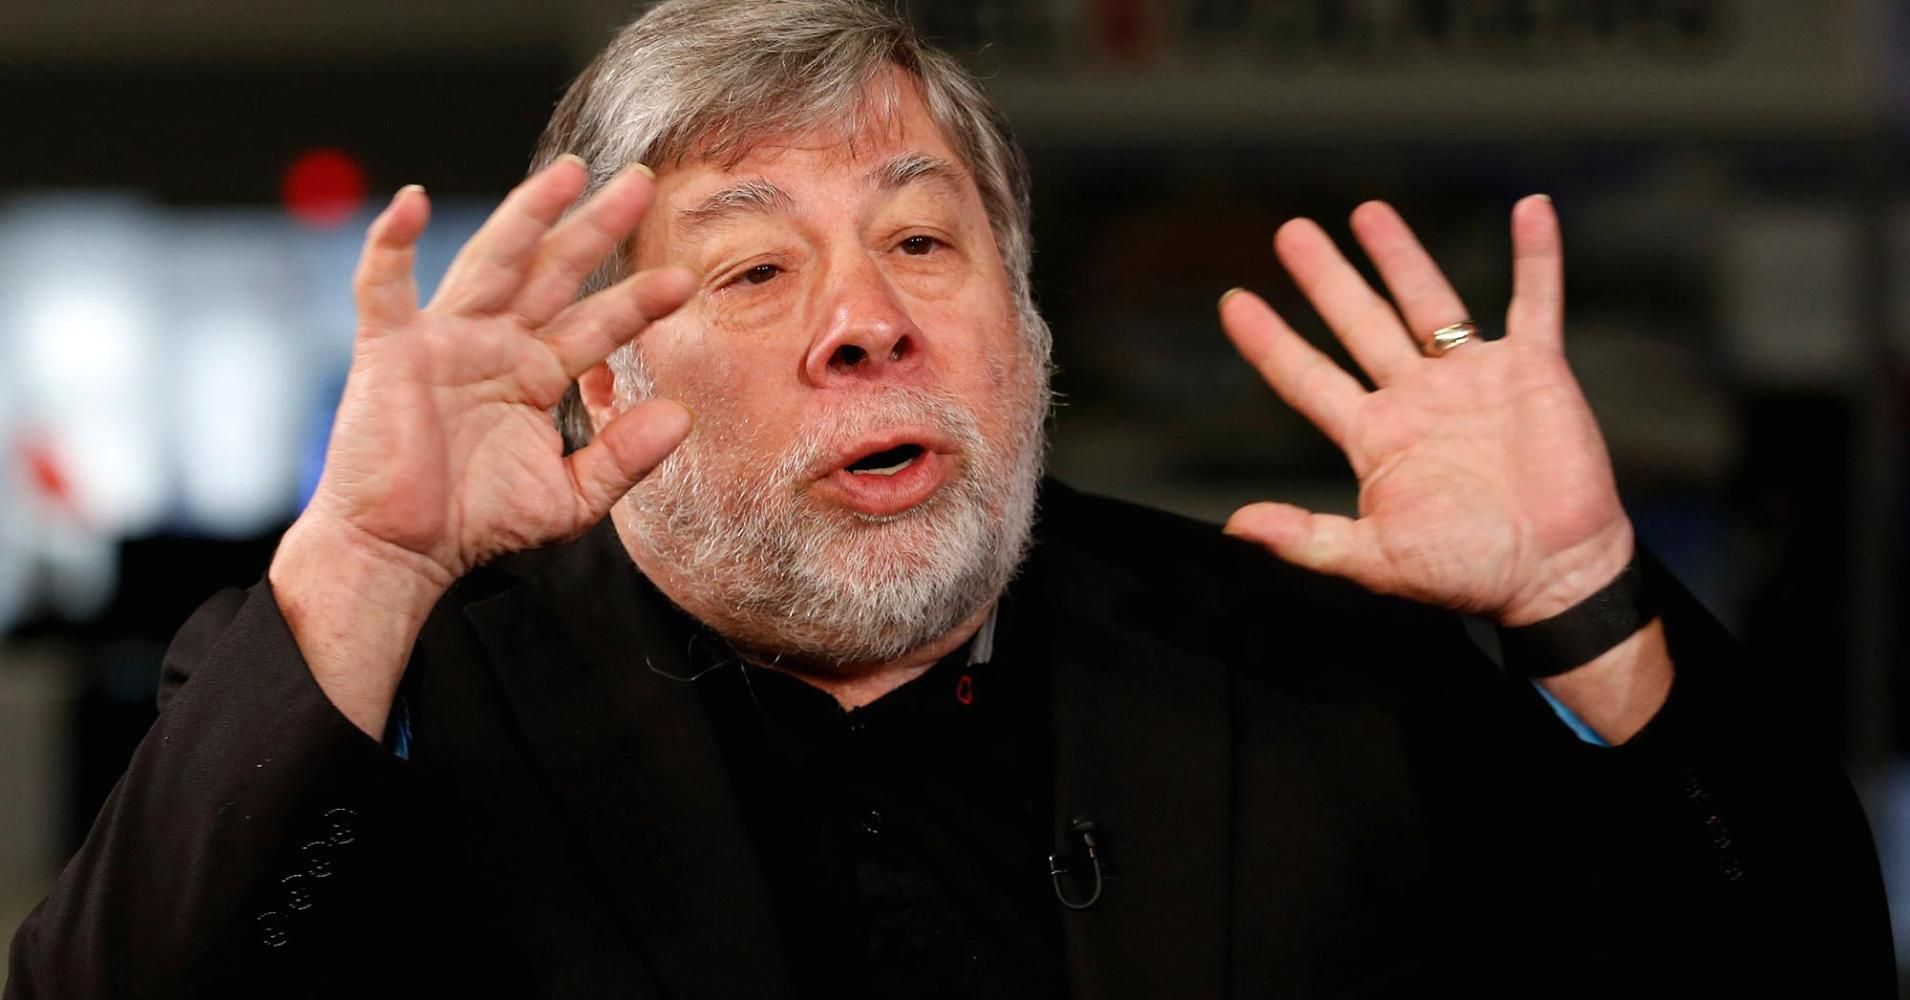 Steve Wozniak ผู้ร่วมก่อตั้ง Apple ประกาศเลิกใช้ Facebook หลังเกิดข่าวข้อมูลผู้ใช้รั่วไหล